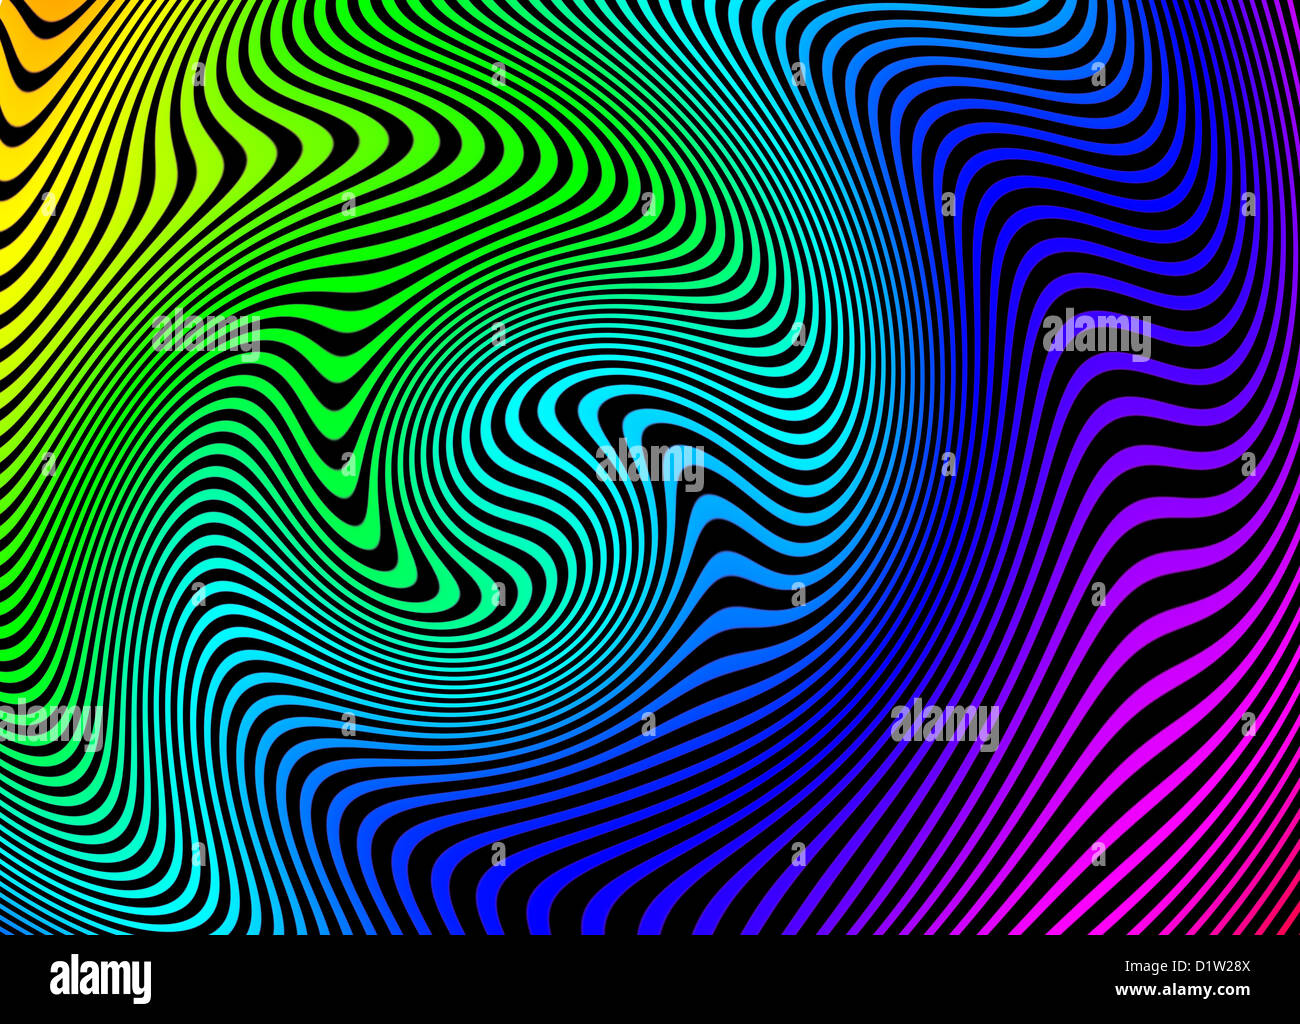 Psychedelic swirl design Stock Photo